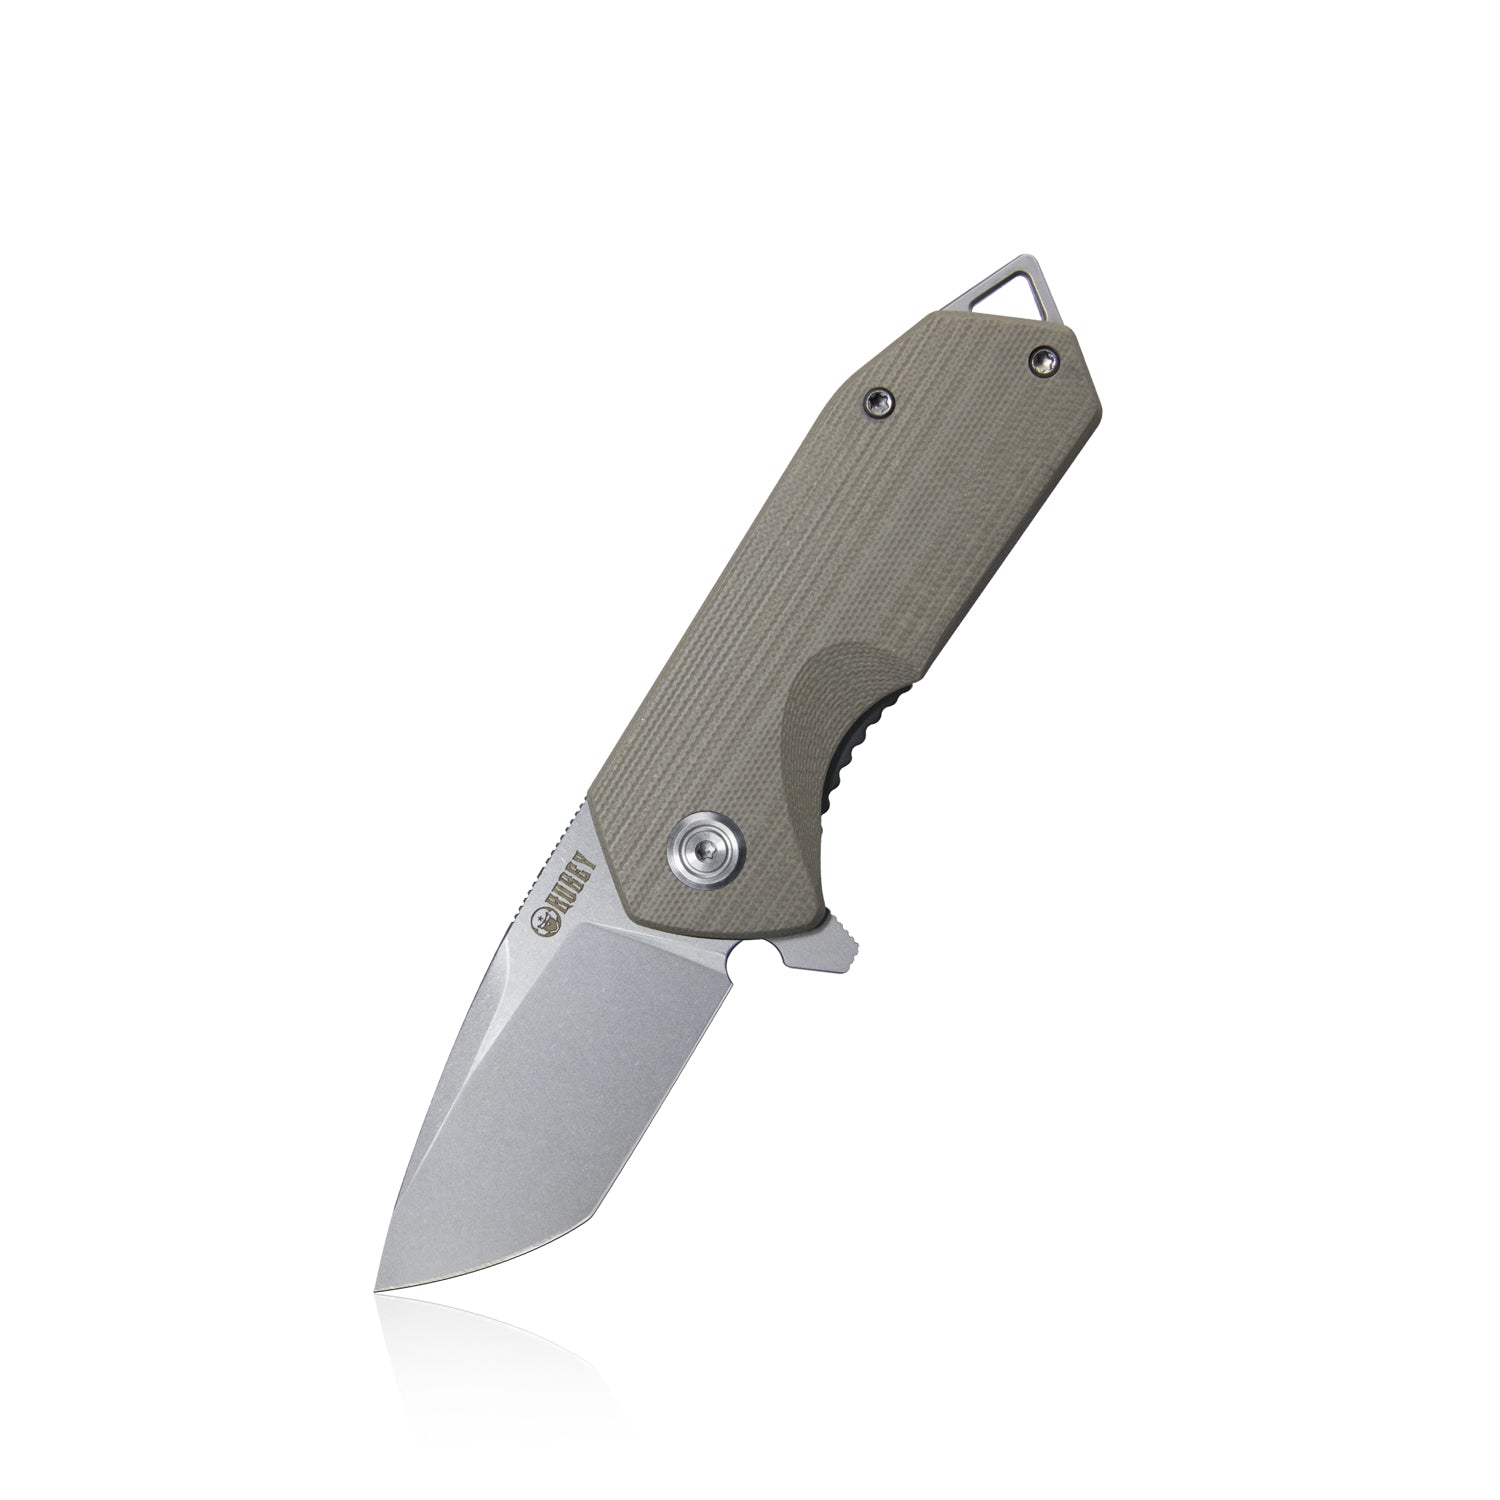 Kubey Campe Nest Liner Lock EDC Flipper Knife Striped Khaki G10 Handle 2.36"Bead Blasted D2 KU203G